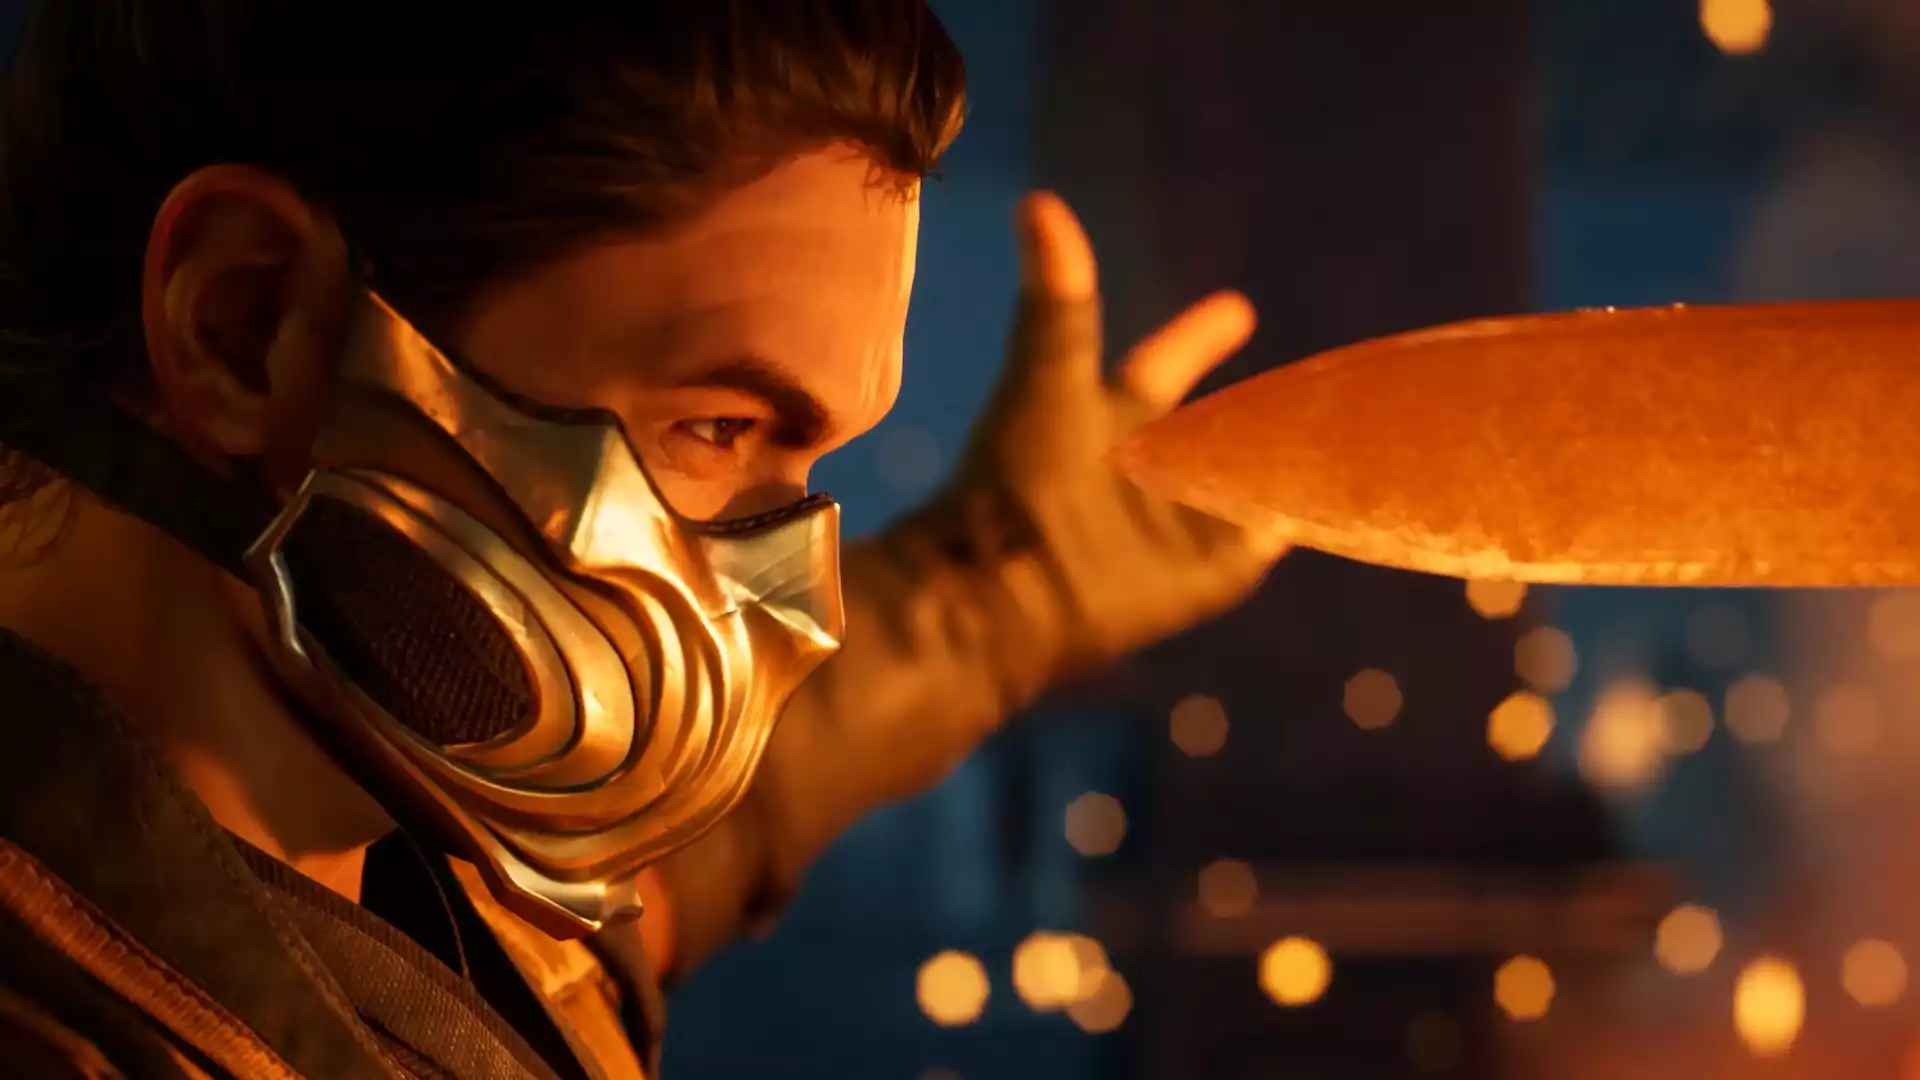 Mortal Kombat 1 ending explained: What happens in post-credit scene in MK1?